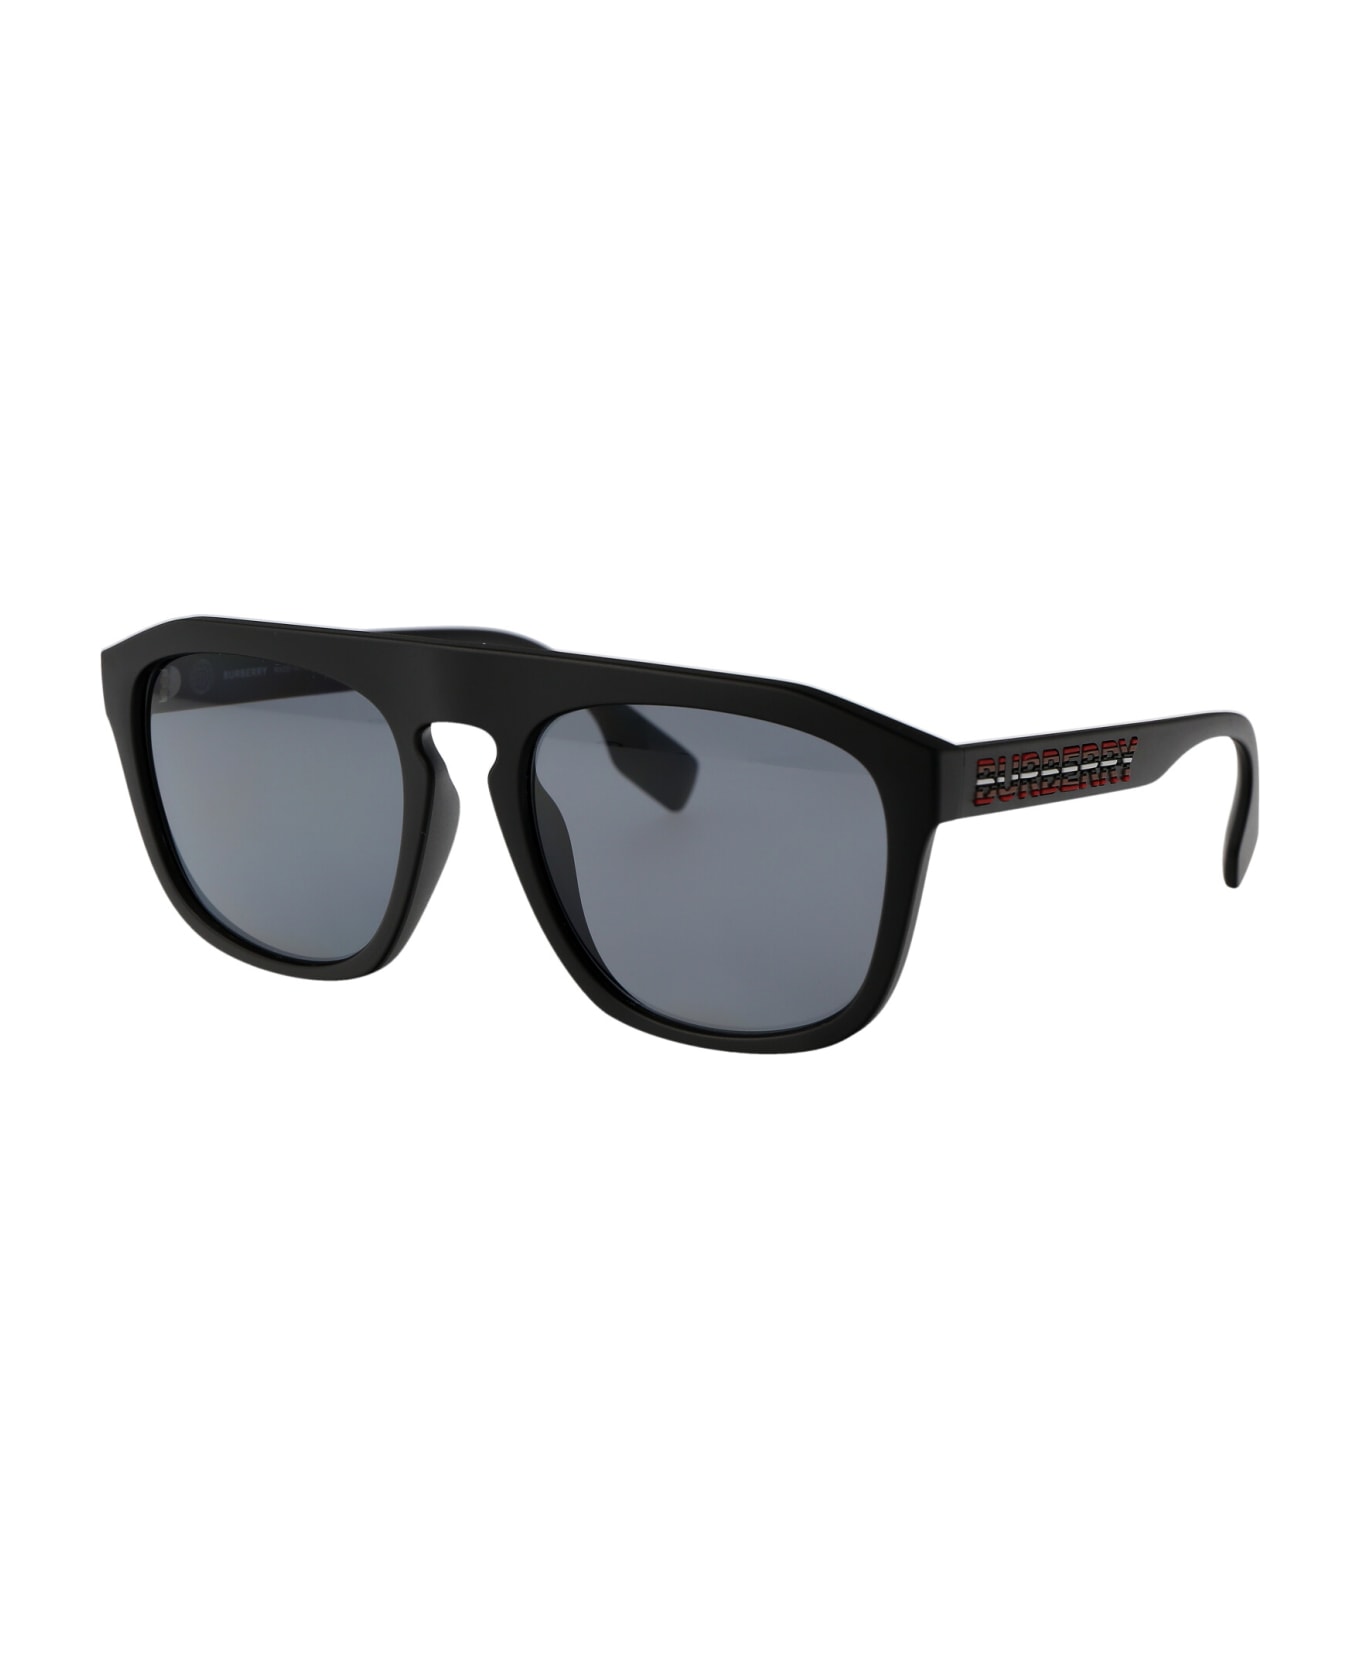 Burberry Eyewear Wren Sunglasses - 346481 Matte Black サングラス